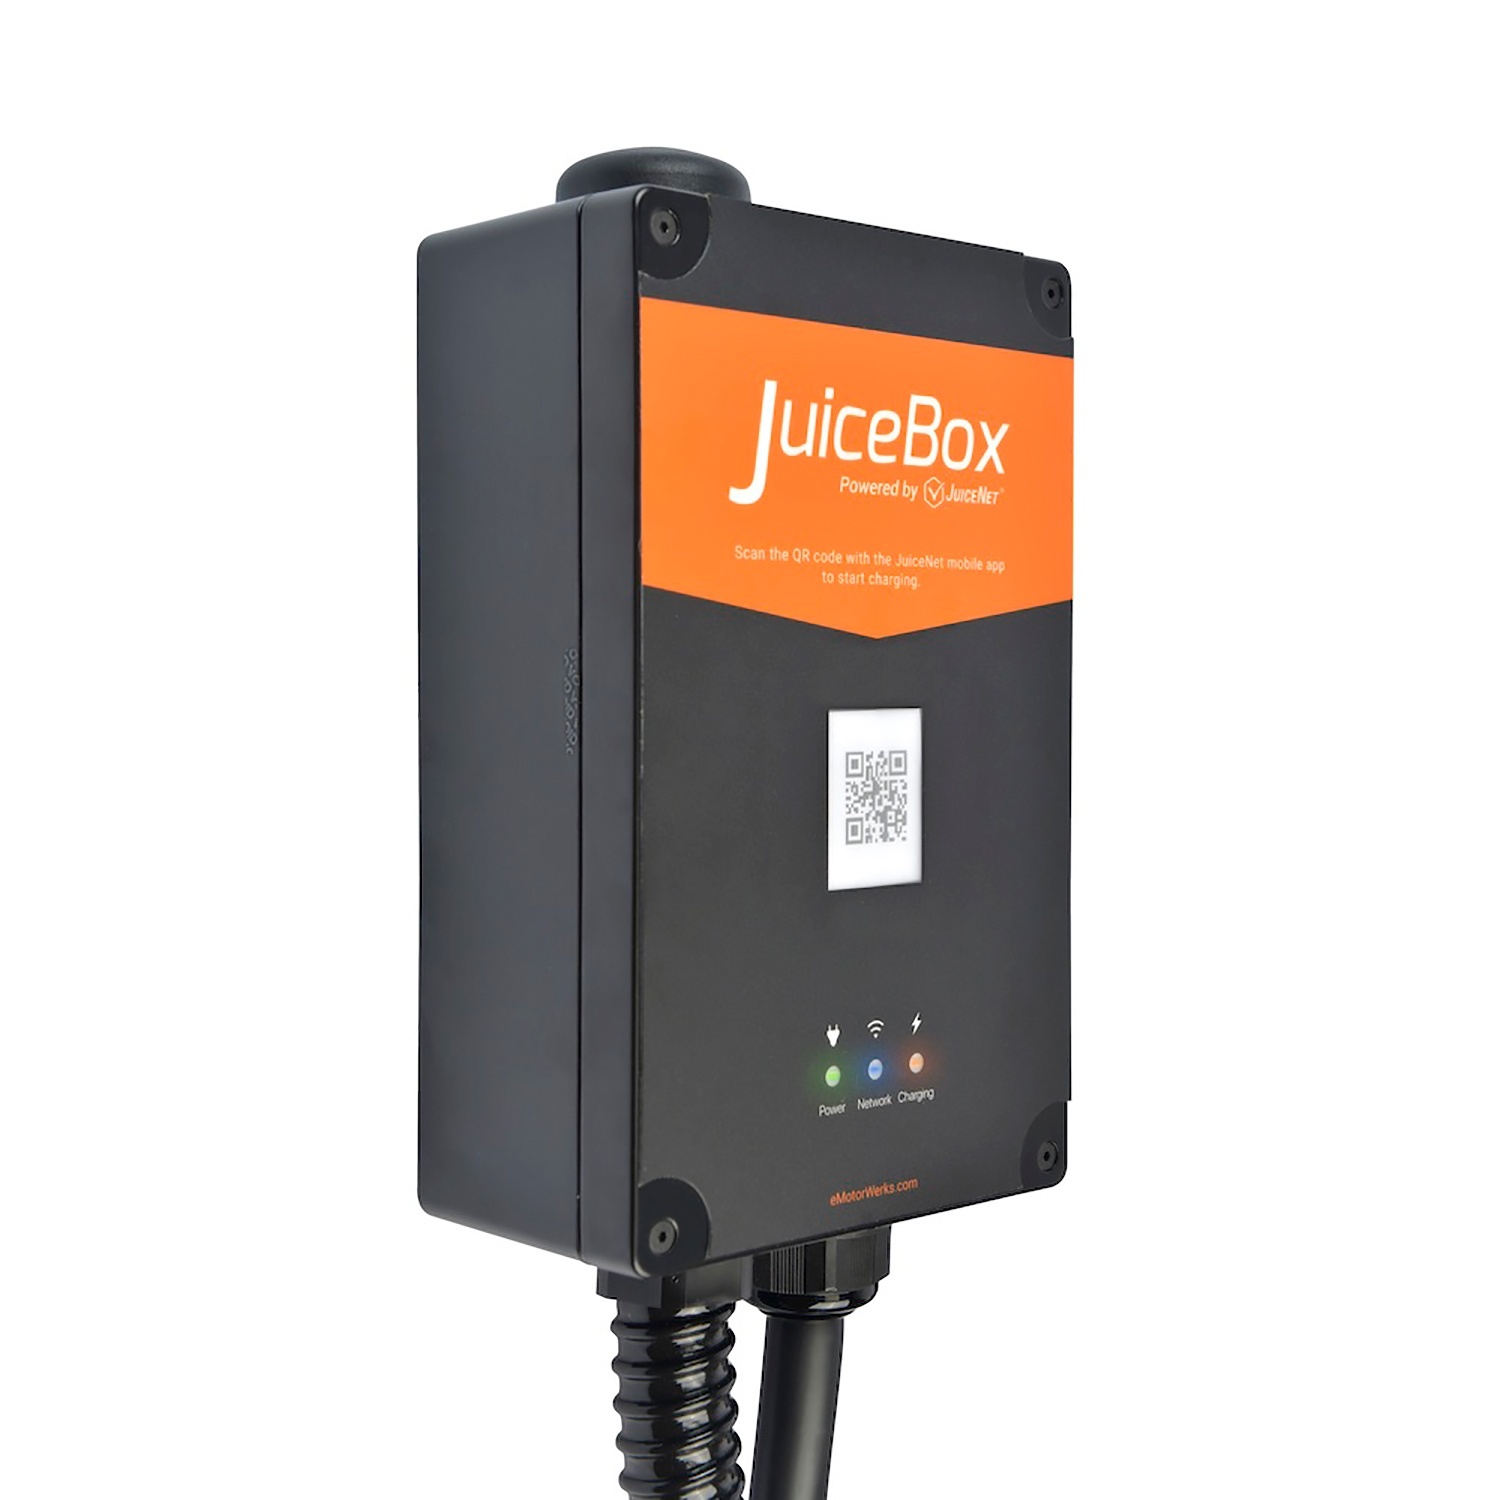 juicebox pro review